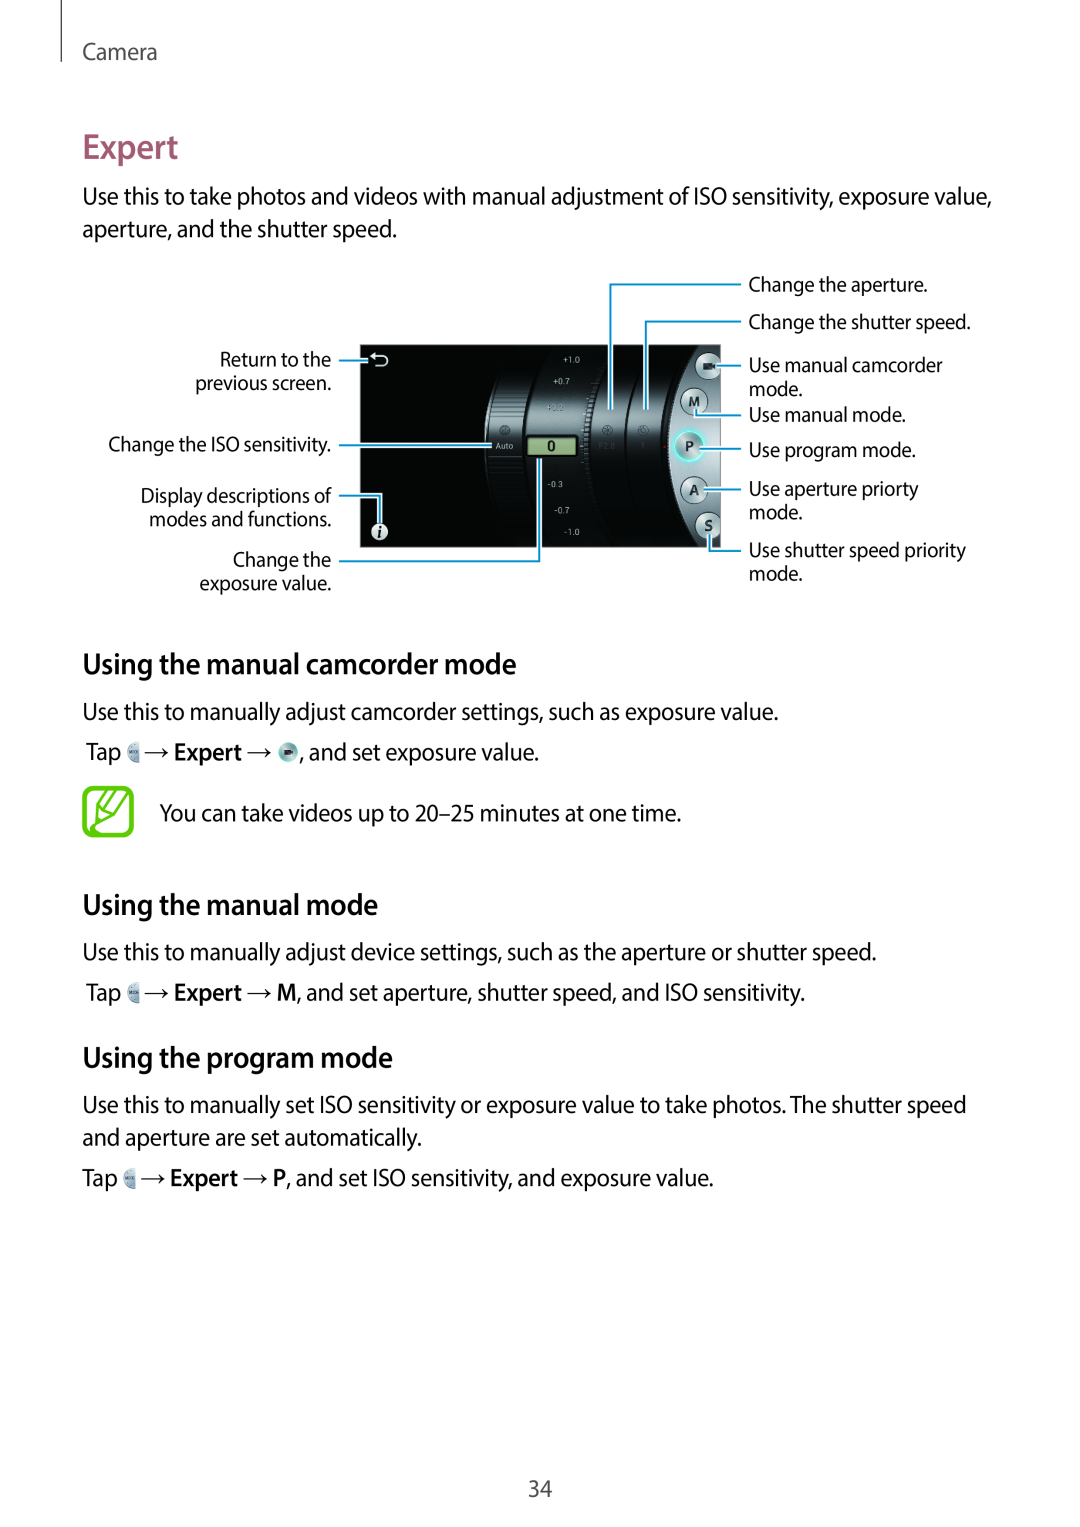 Samsung EK-GC100 user manual Expert, Using the manual camcorder mode, Using the manual mode, Using the program mode, Camera 